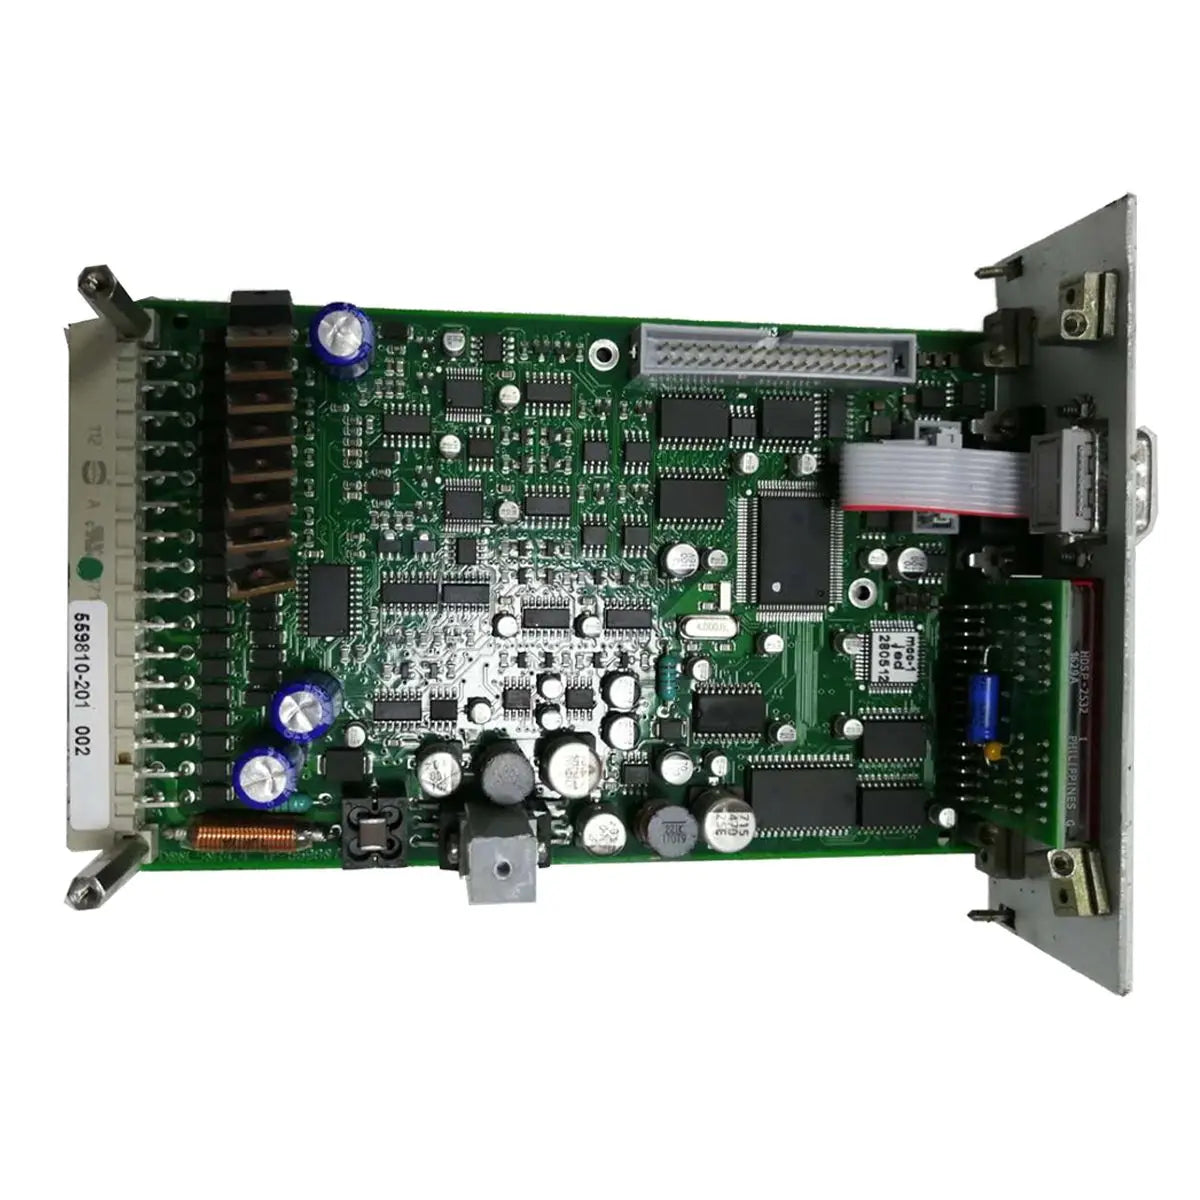 Schroff TMCC2 Circuit Board Used